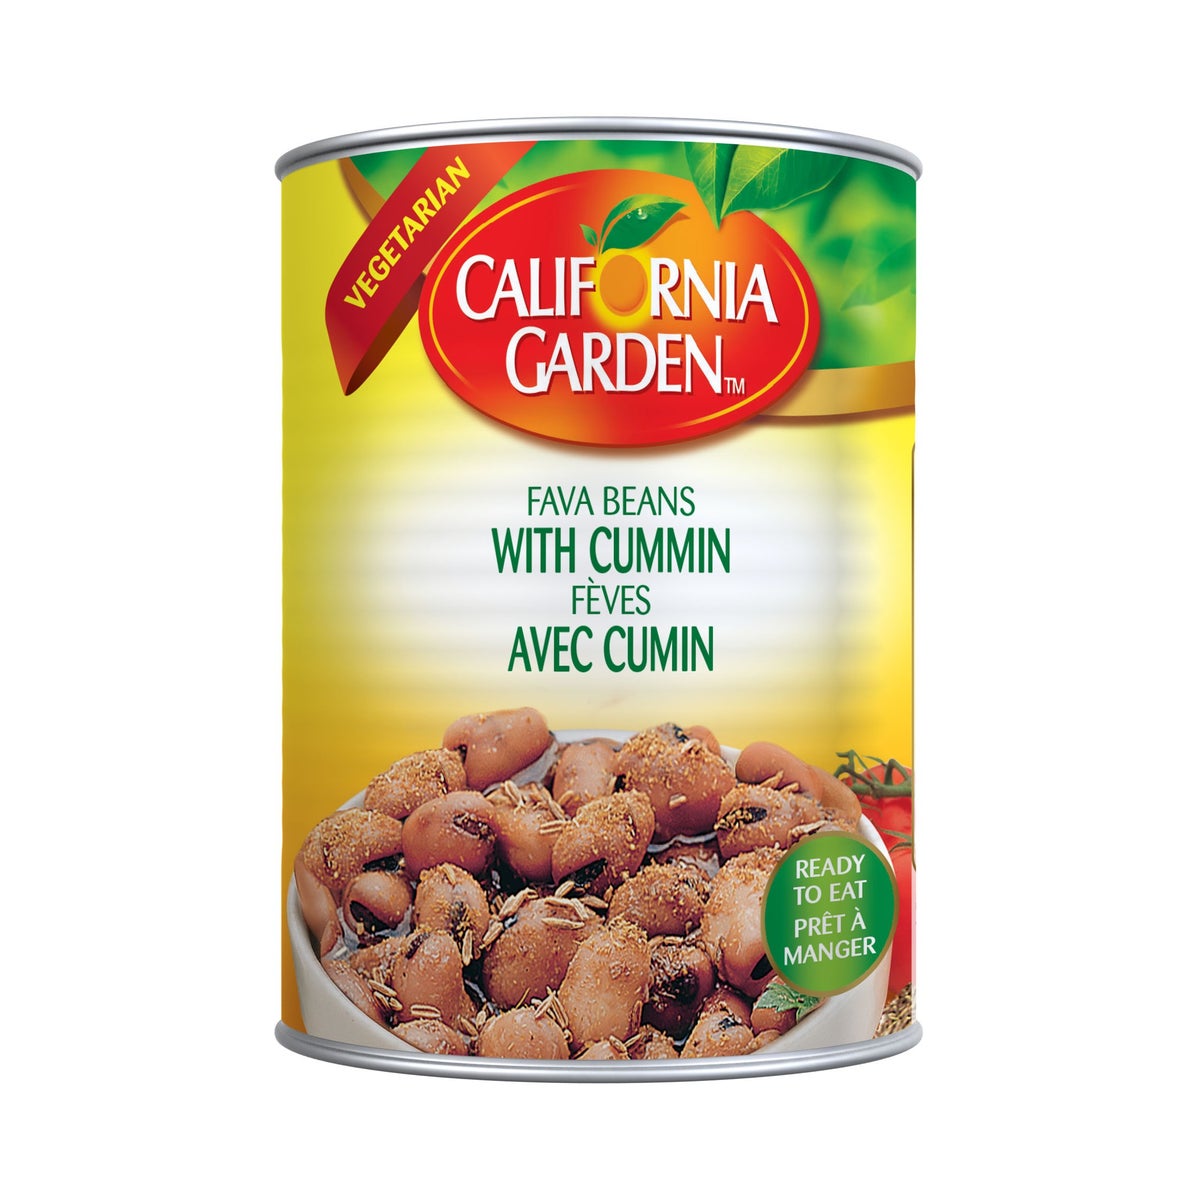 Fava Beans- Cumin Recipe "CALIFORNIA GARDEN" 16 oz